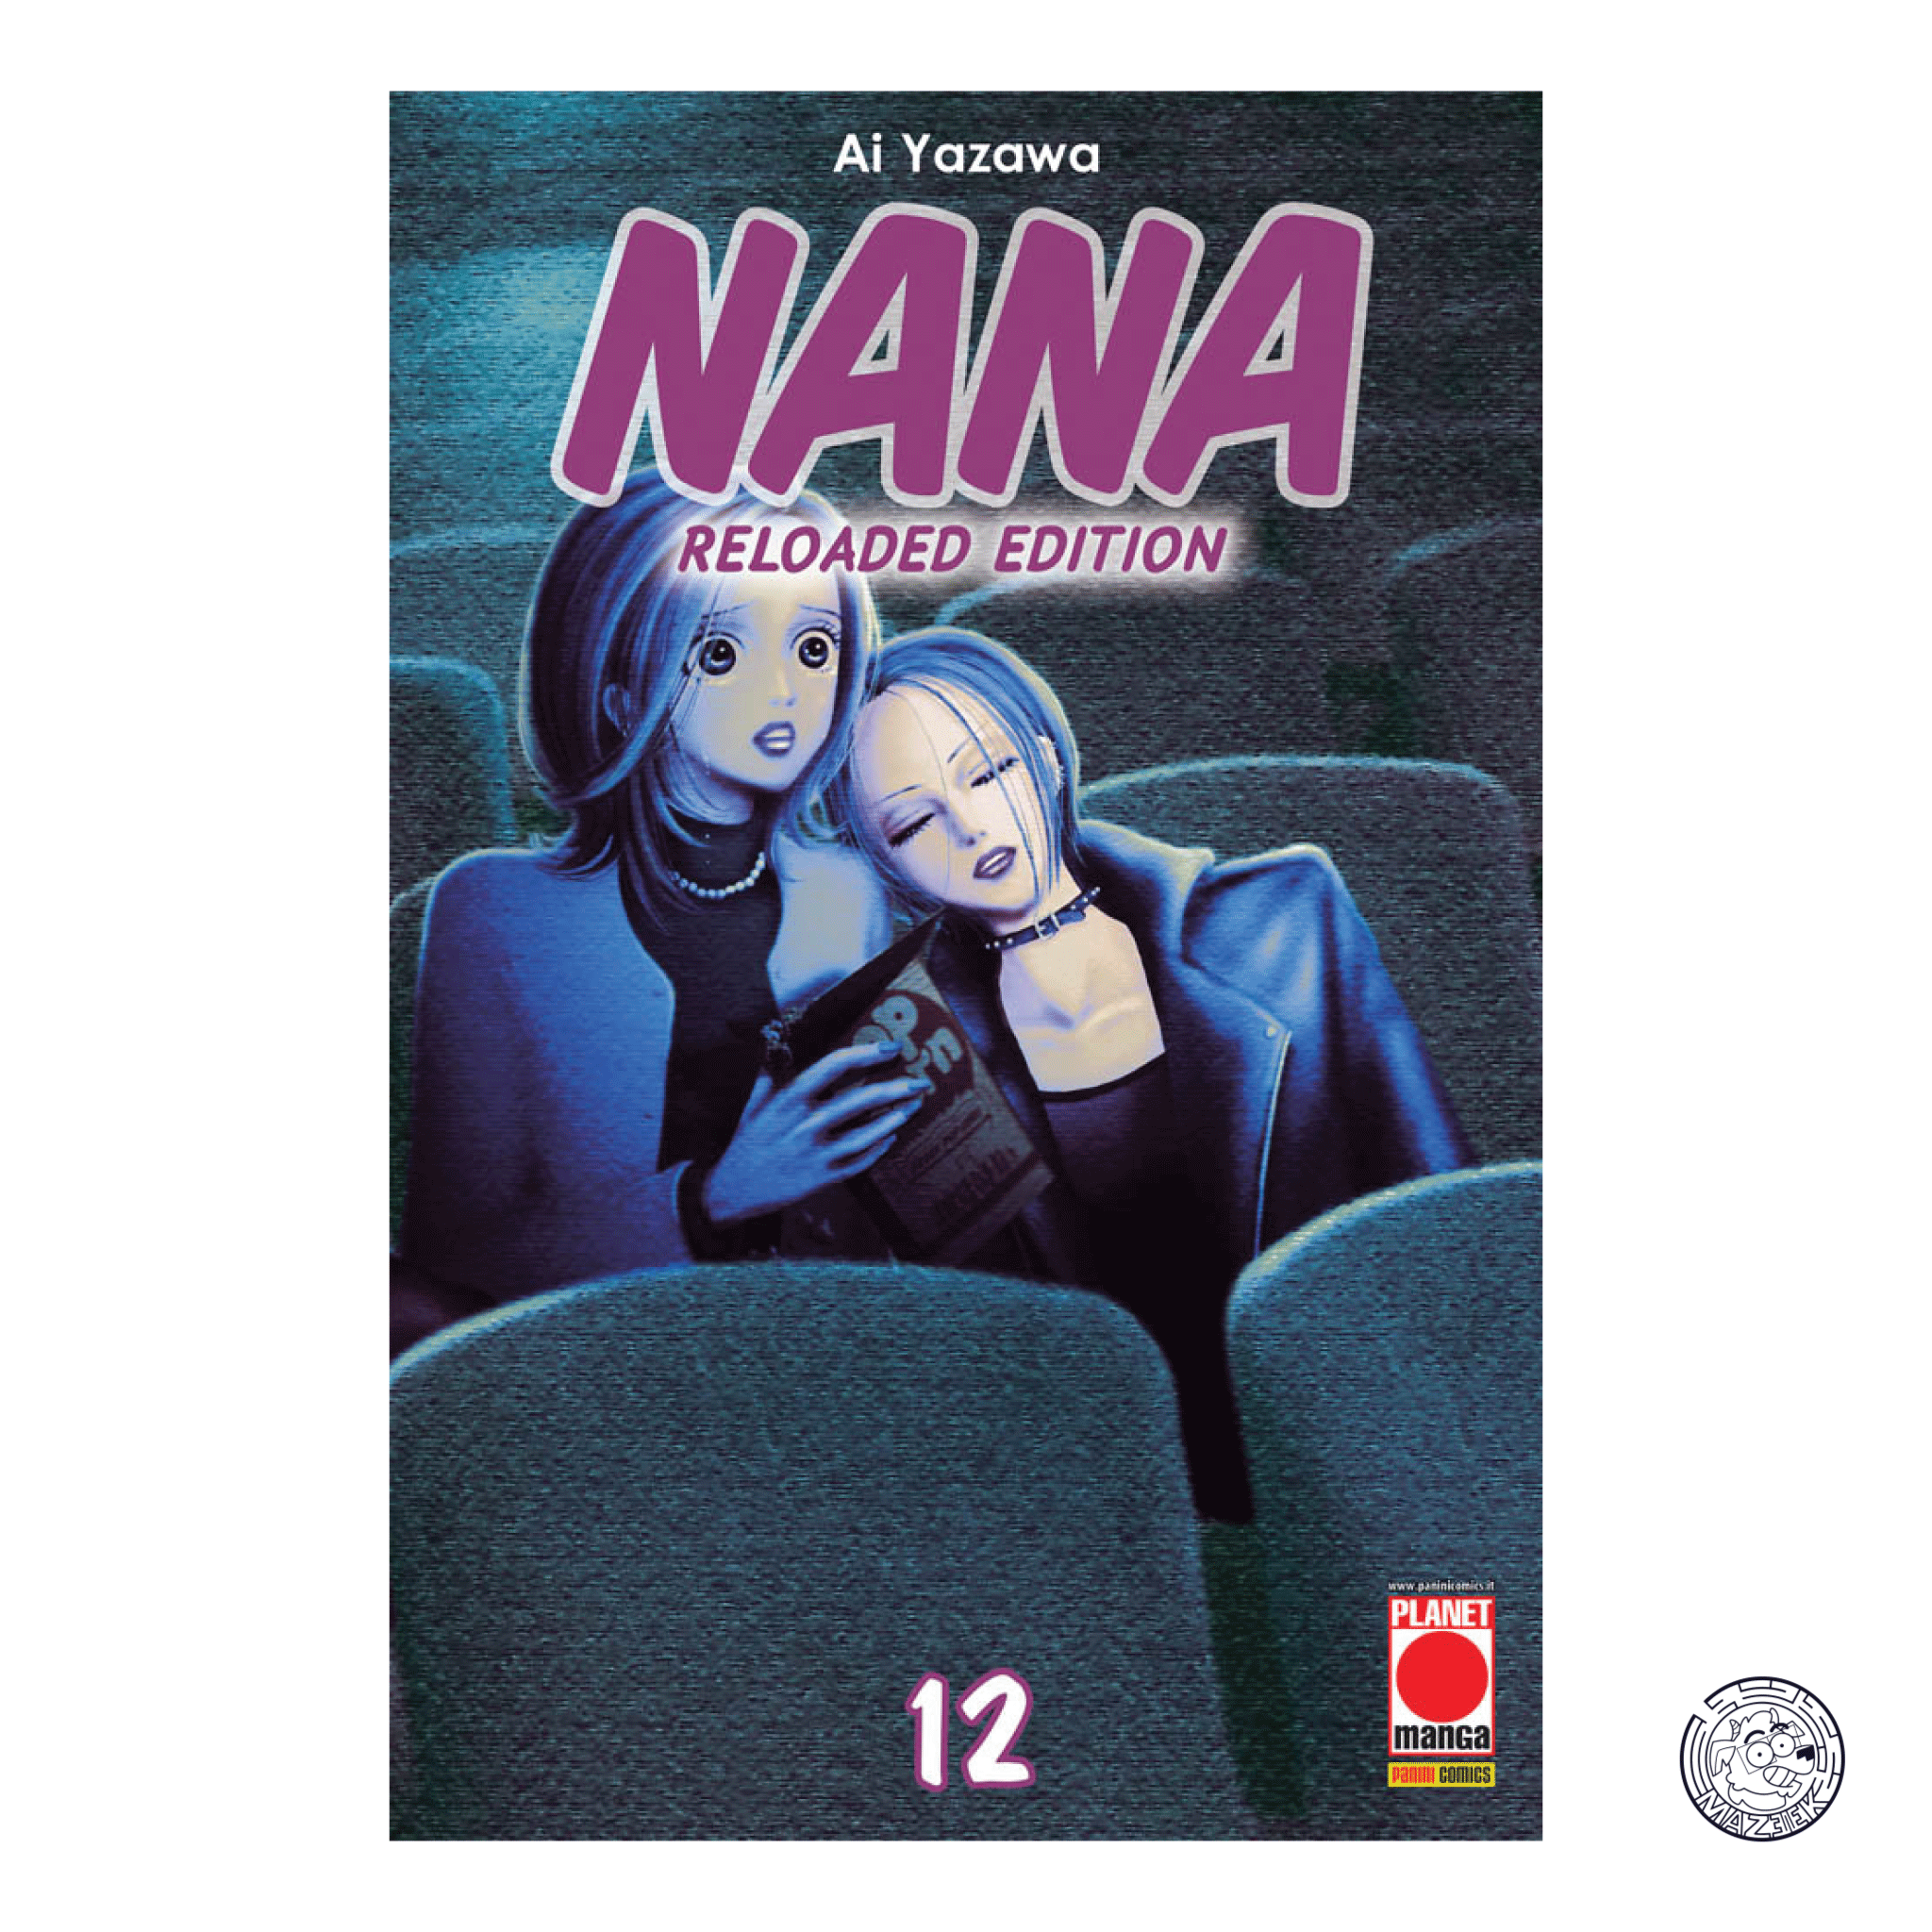 Nana Reloaded Edition 12 - Reprint 1